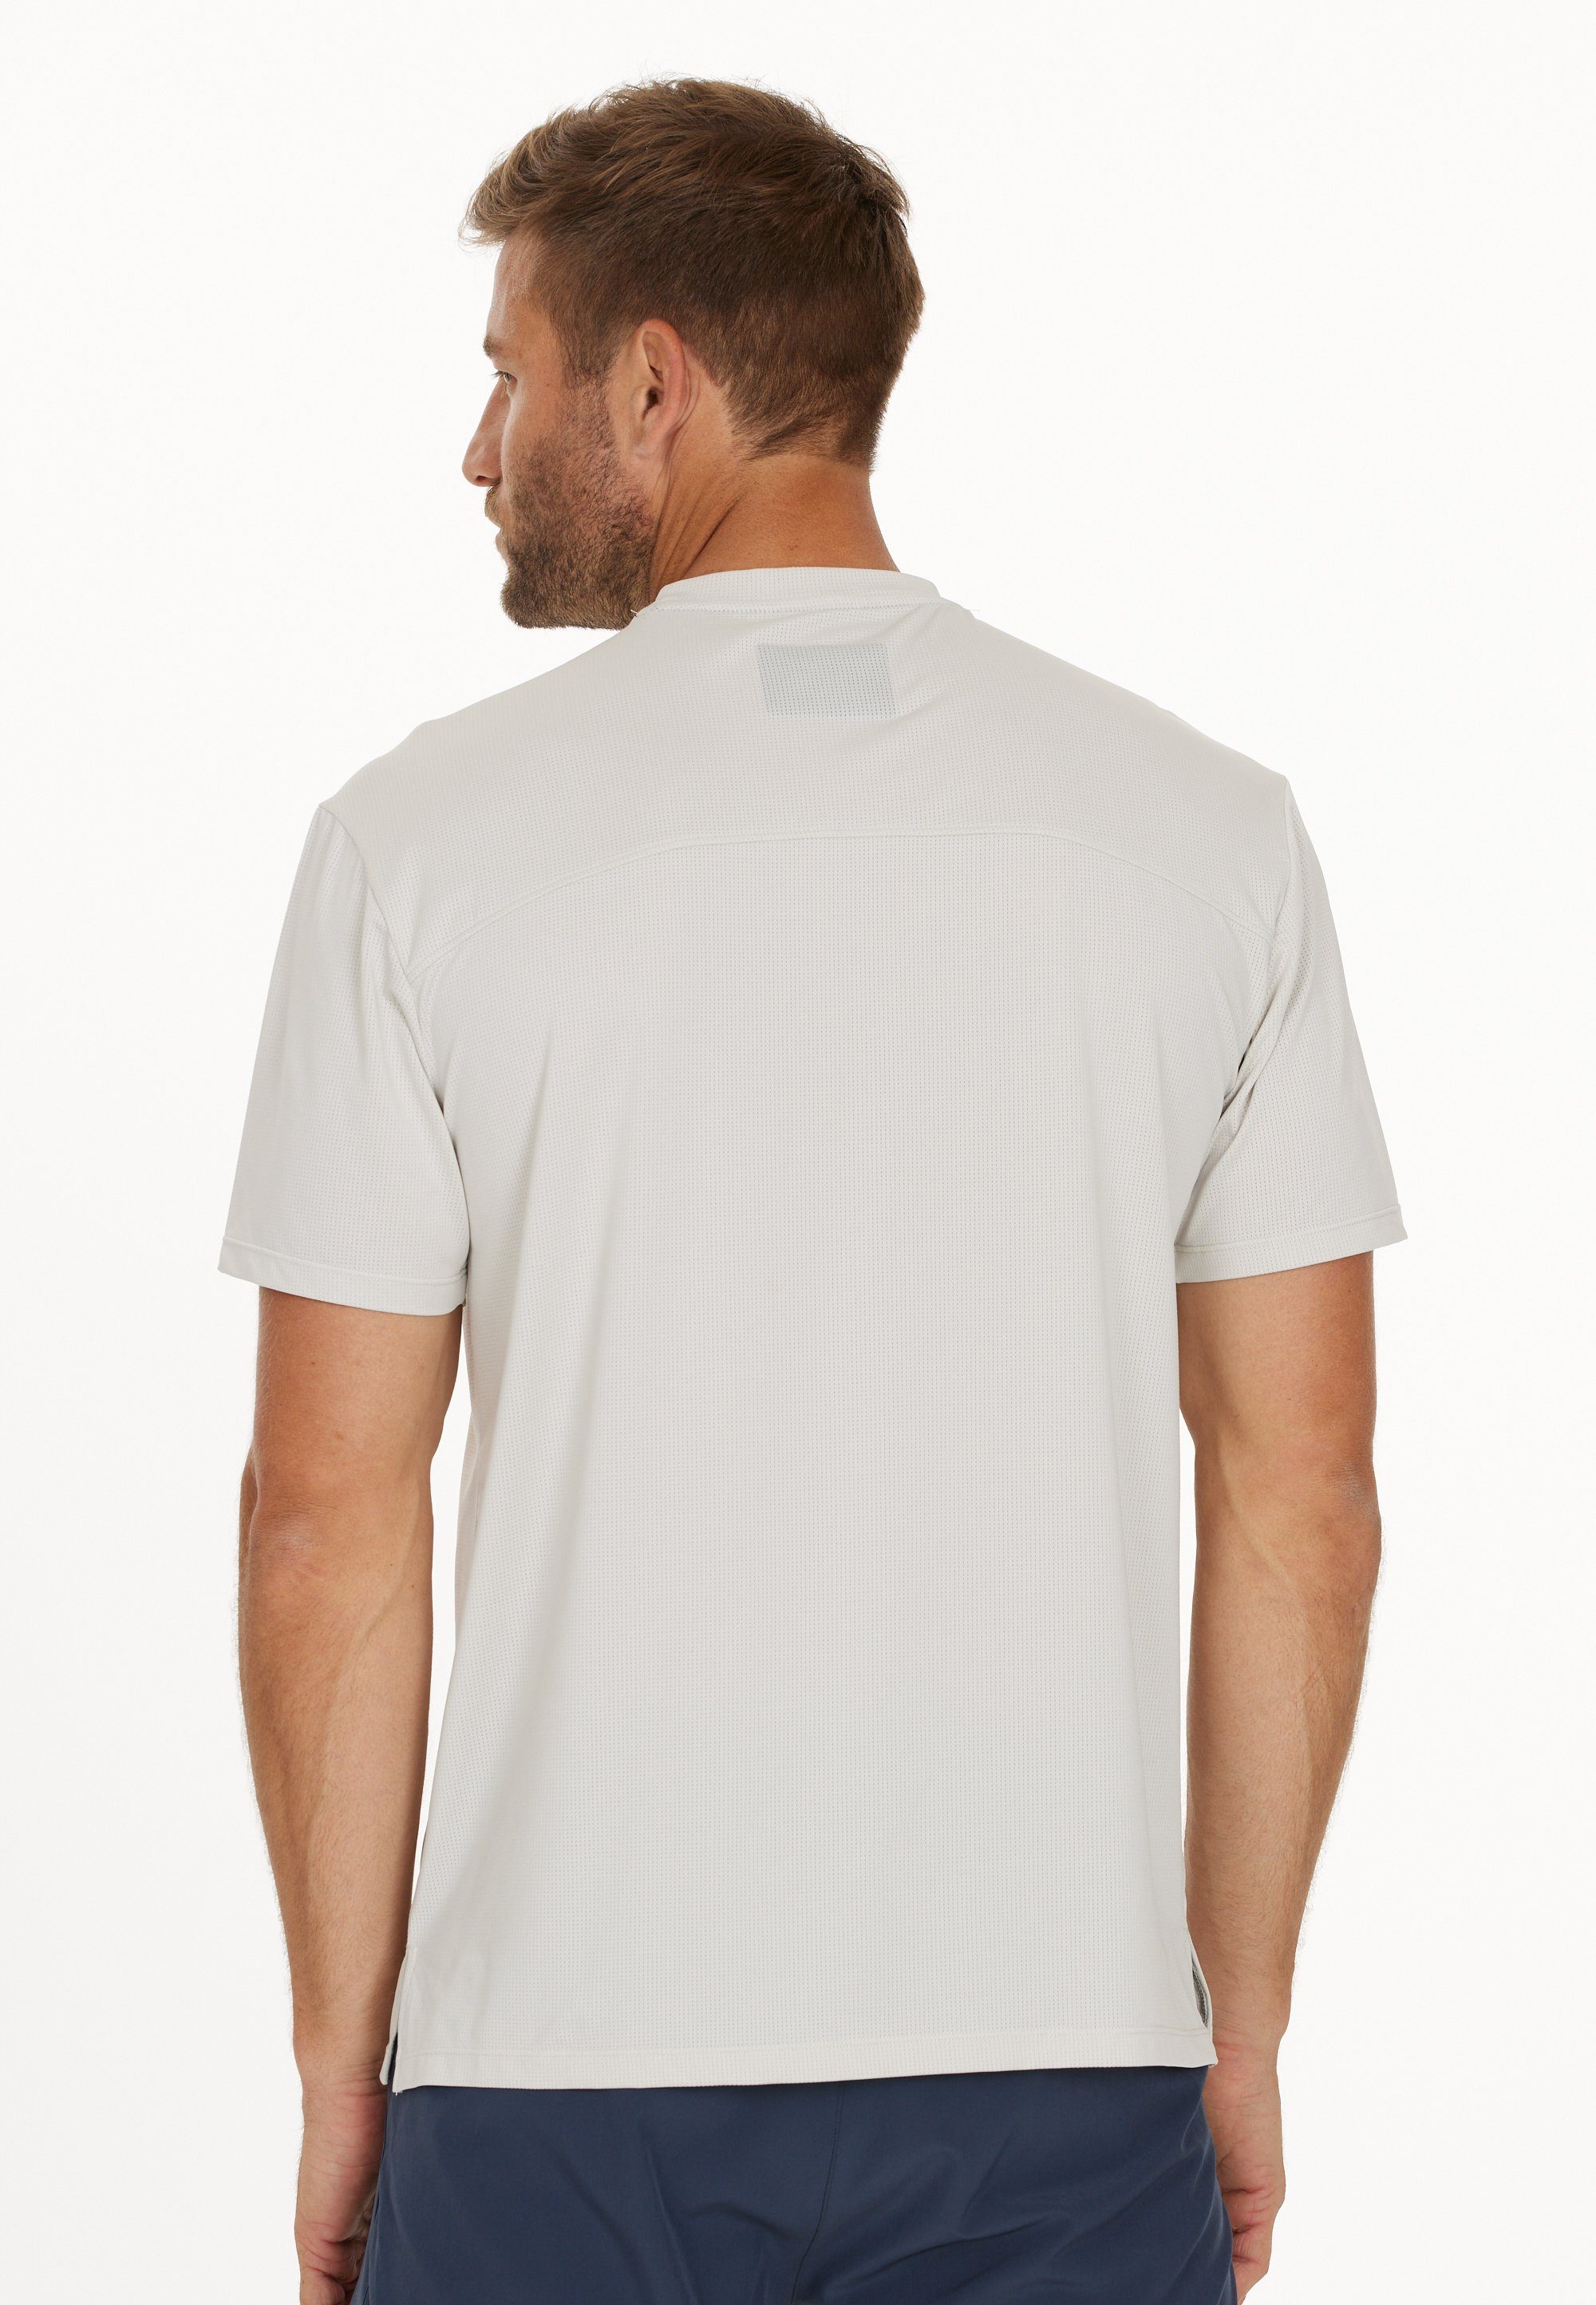 T-Shirt Virtus Easton offwhite mit feuchtigkeitsregulierender (1-tlg) Funktion